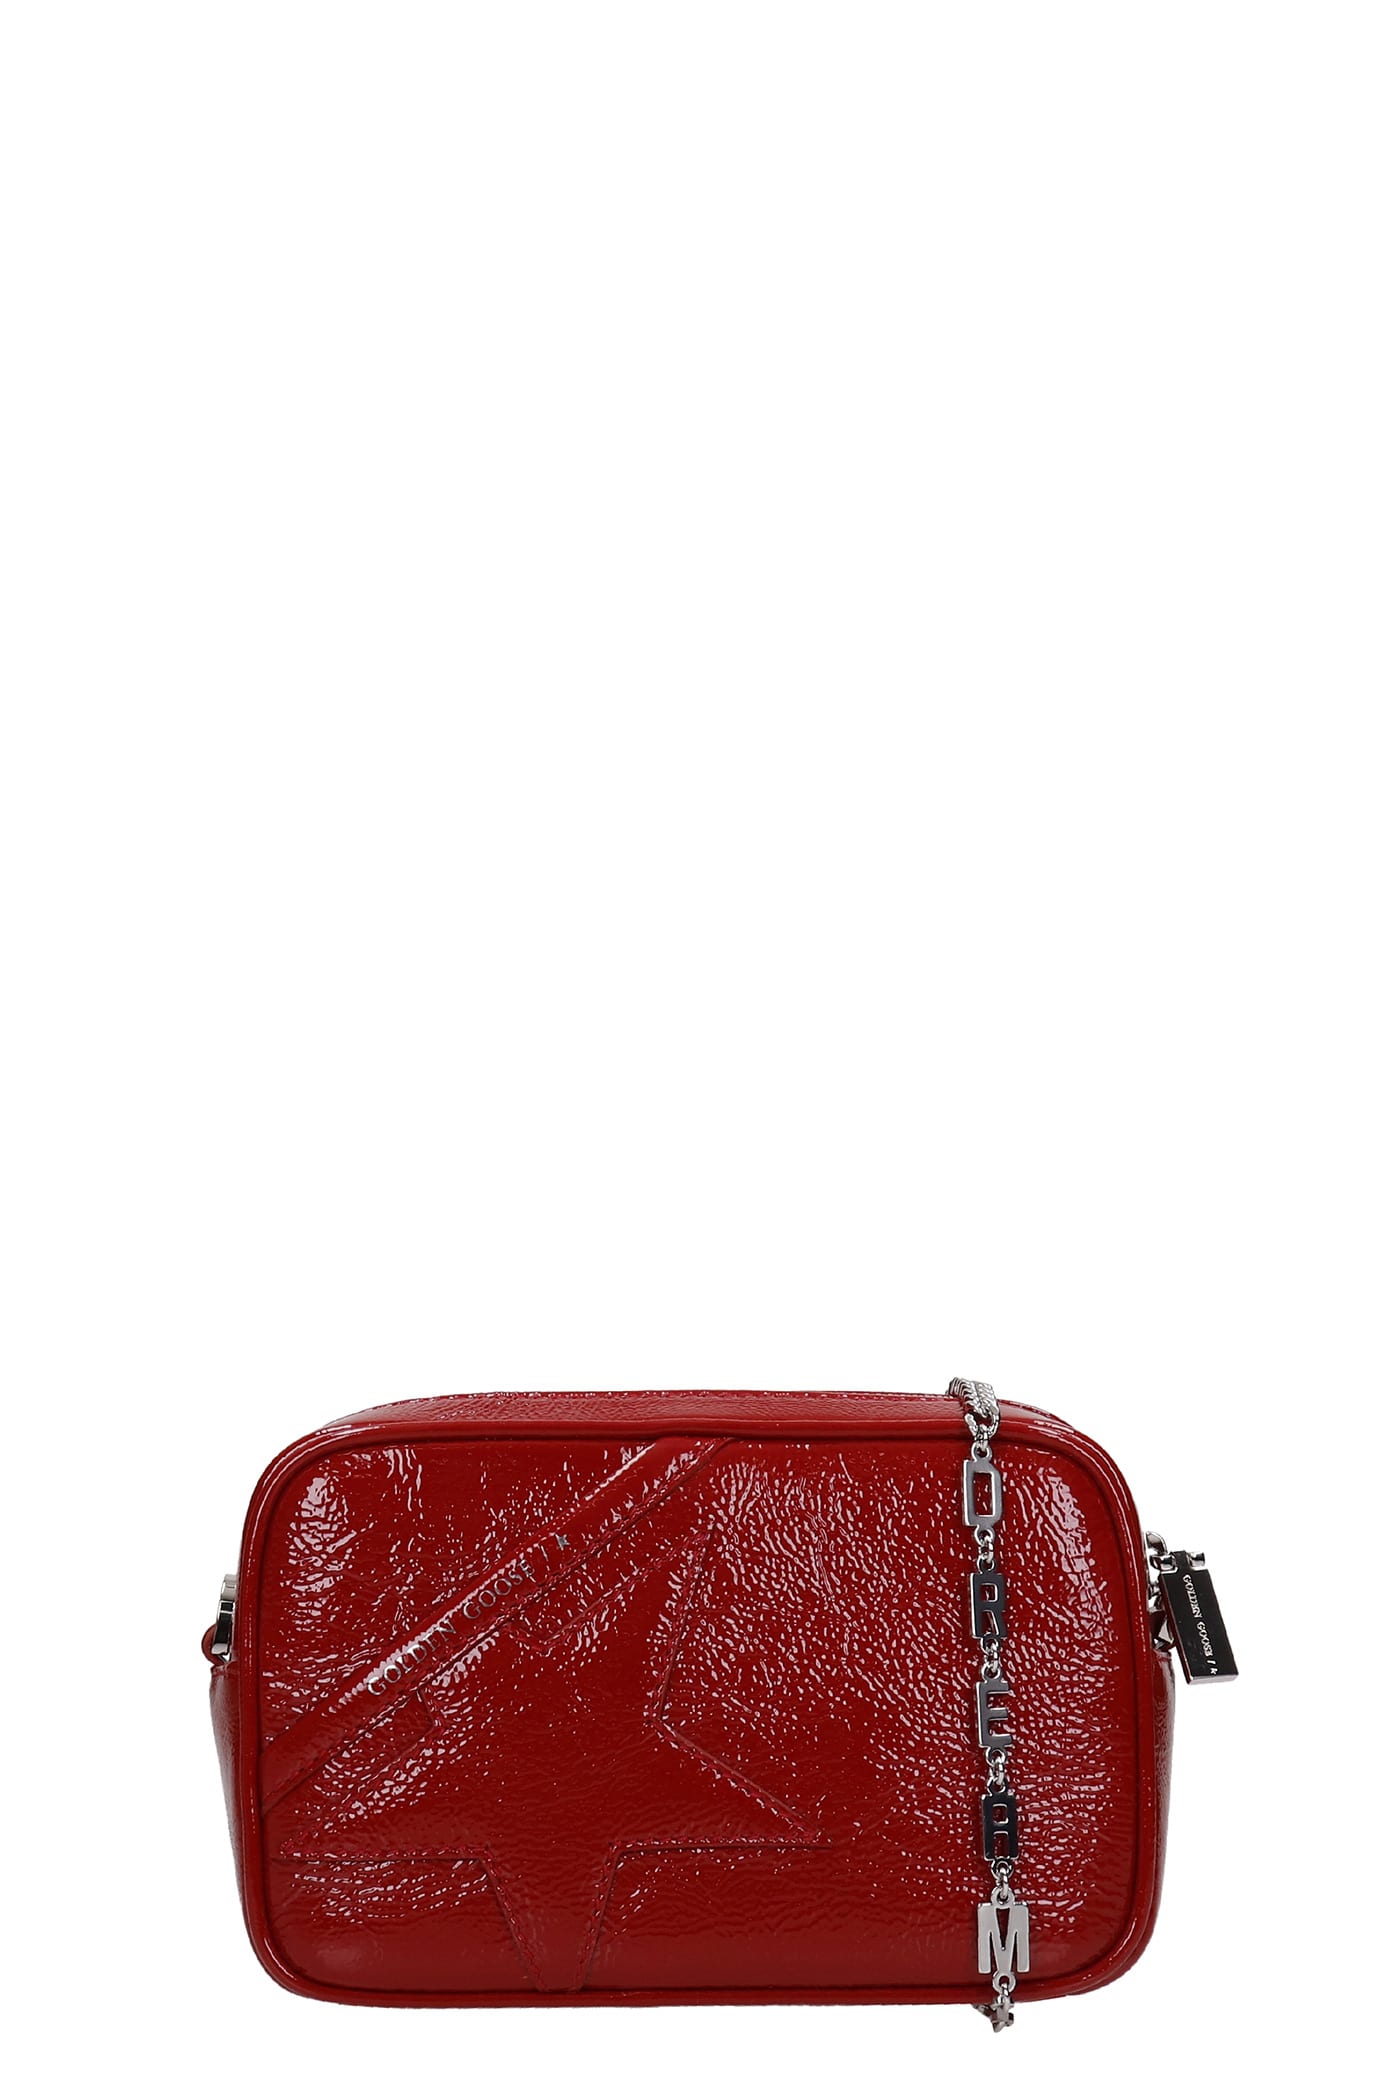 Golden Goose Mini Star Shoulder Bag In Red Patent Leather